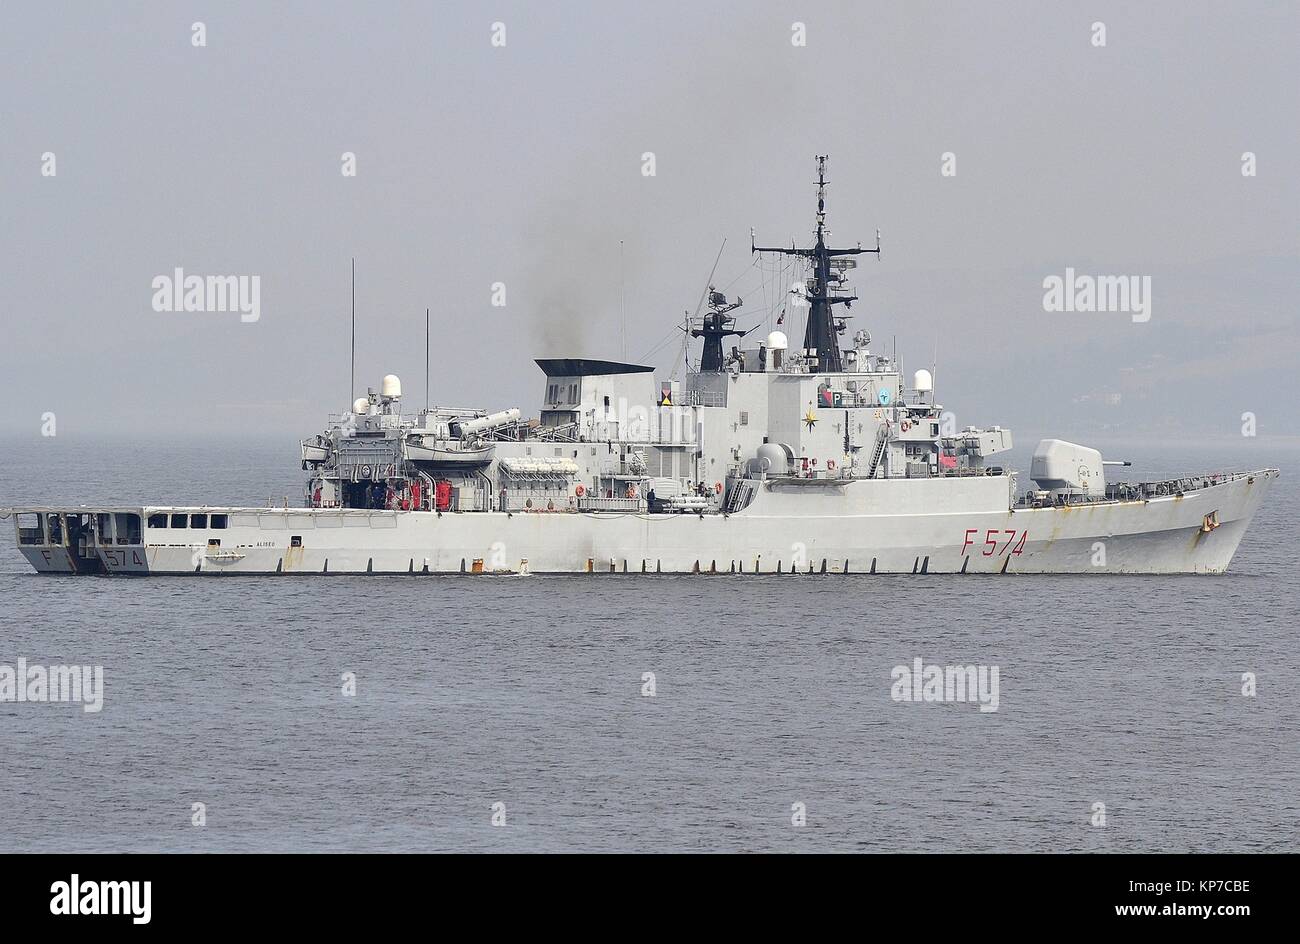 La marina italiana de fragatas clase MAESTRALE ALISEO F574 Foto de stock